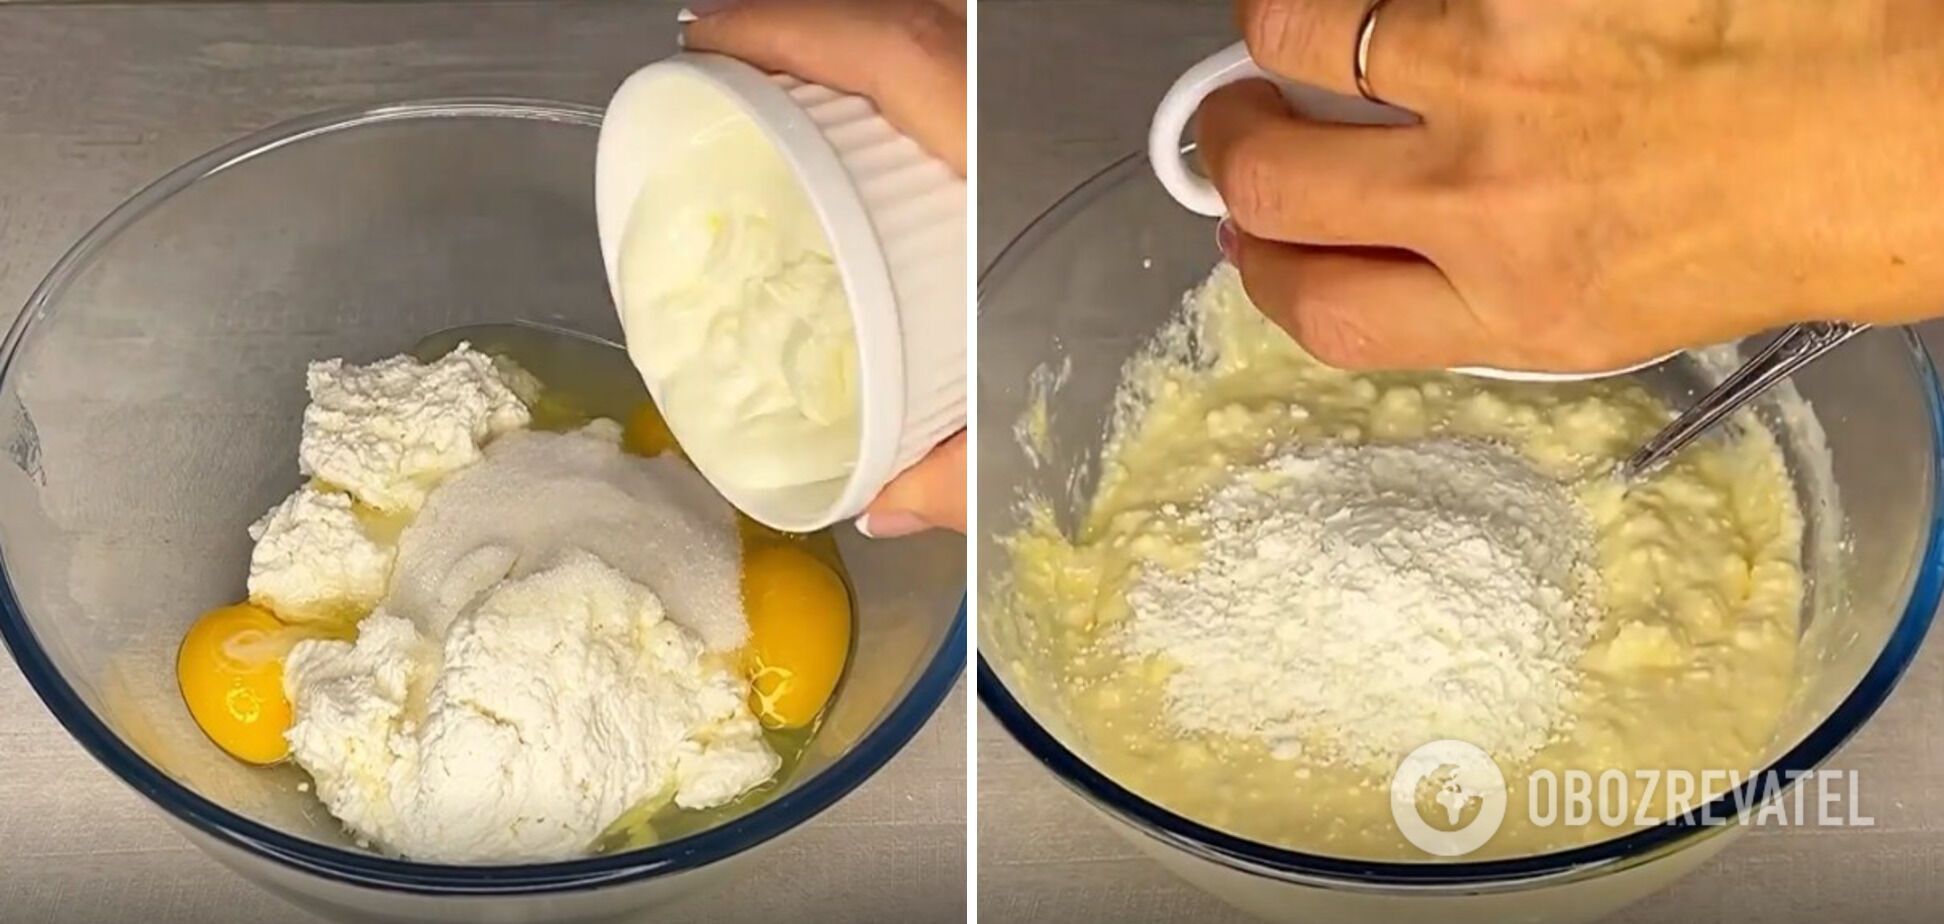 How to make a successful casserole dough